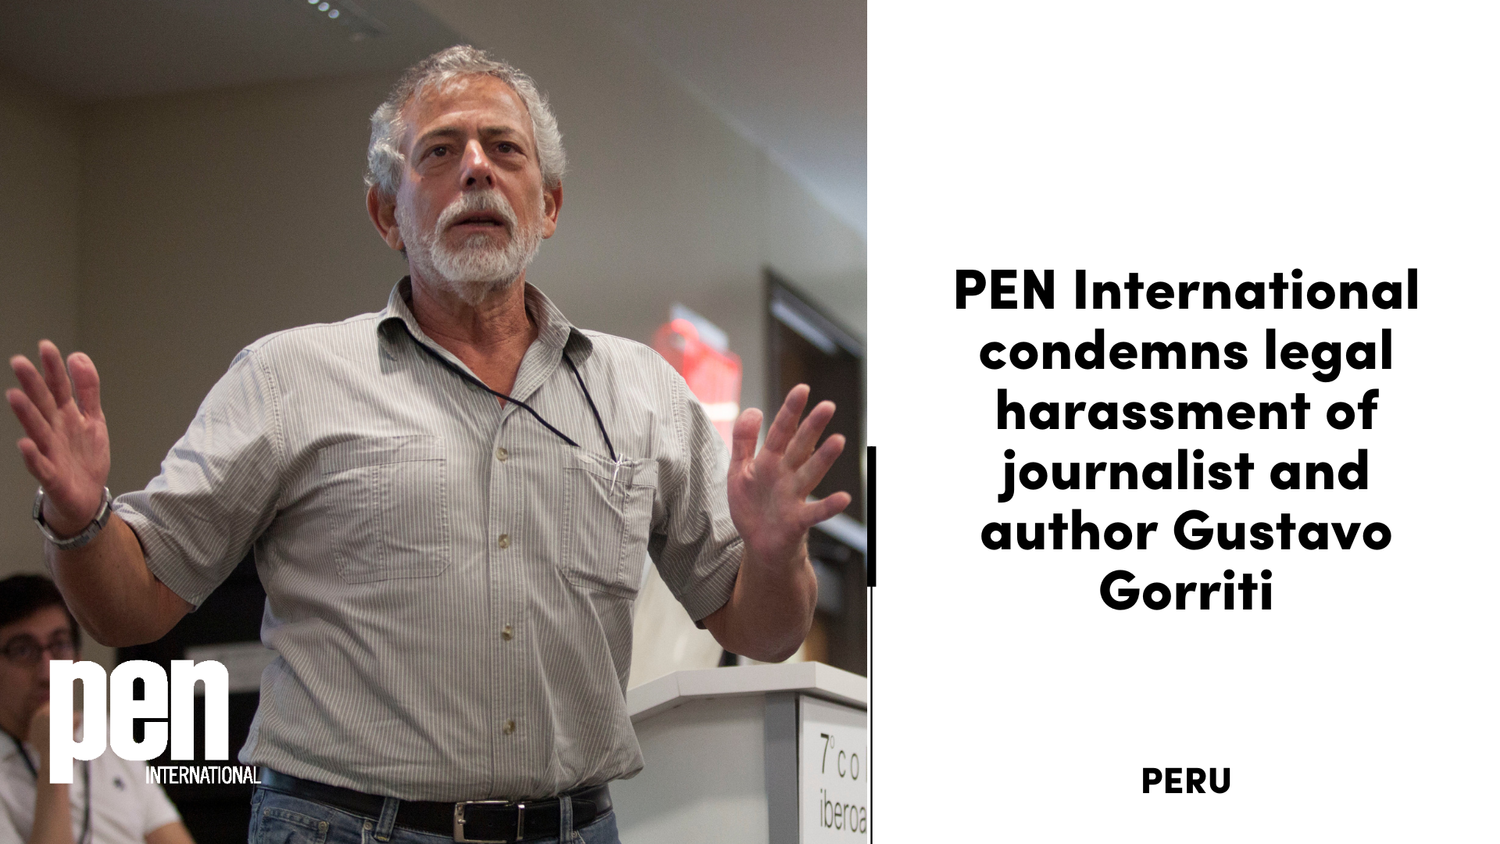 Peru: PEN International condemns legal harassment of journalist and author Gustavo Gorriti